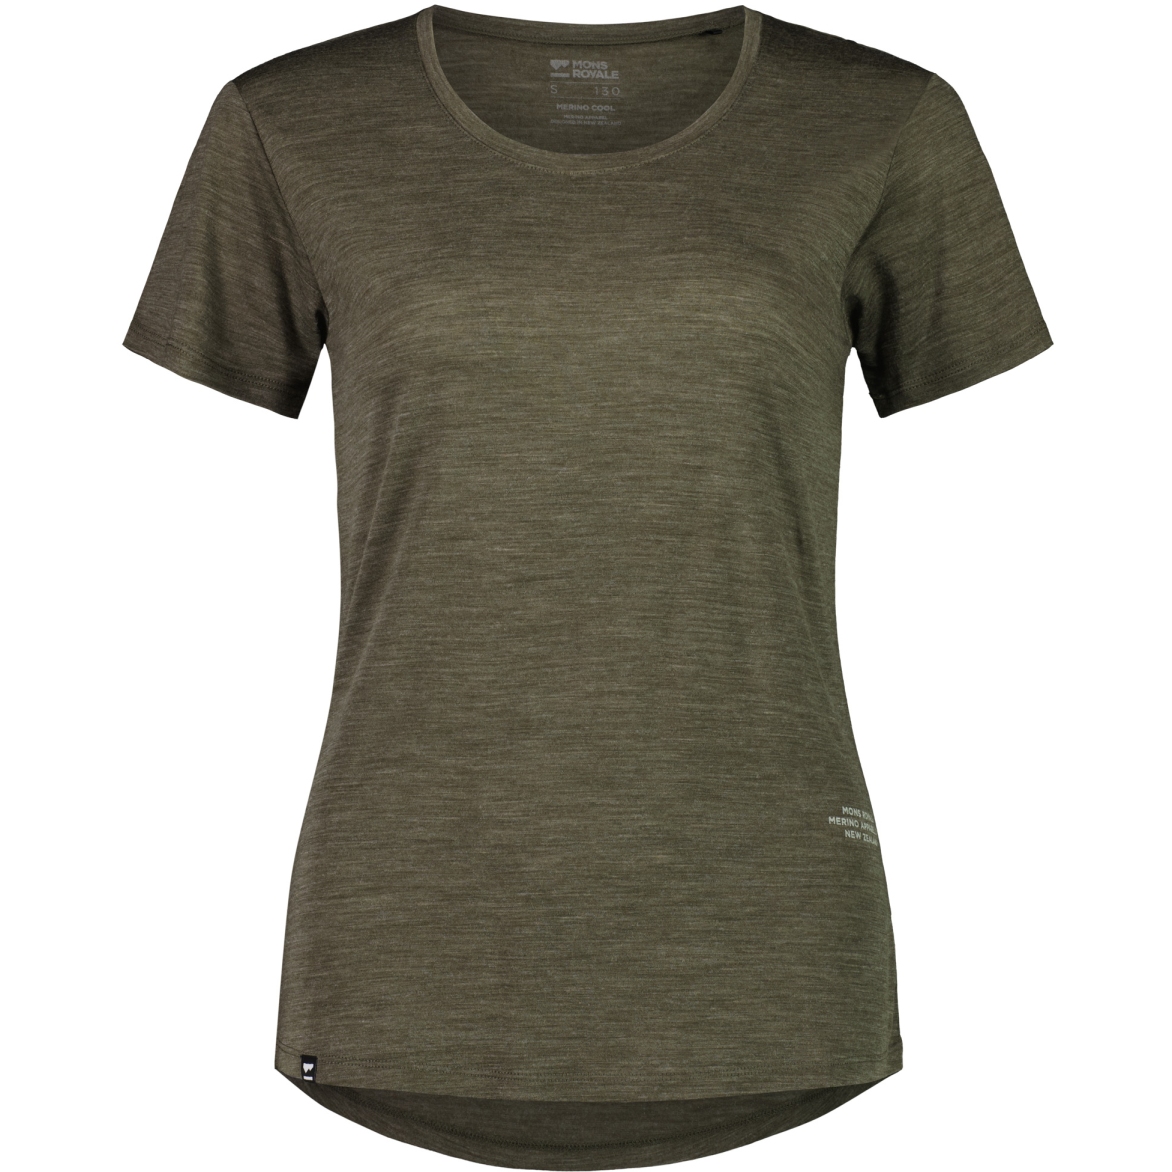 Produktbild von Mons Royale Zephyr Merino Cool T-Shirt Damen - oliv